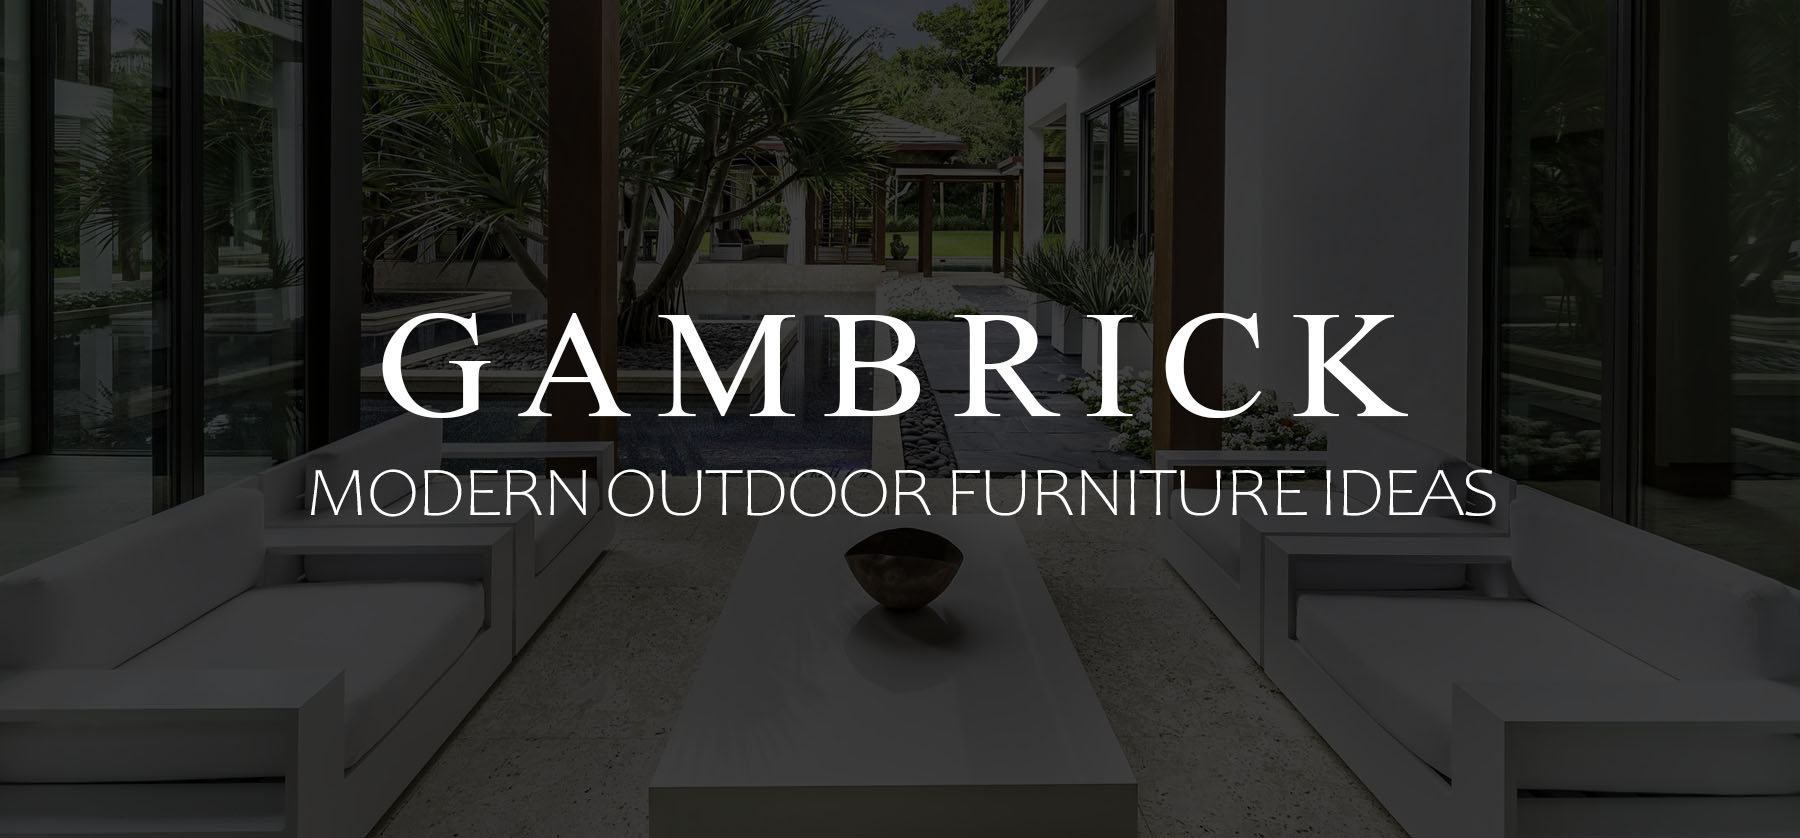 modern outdoor furniture ideas banner picture 